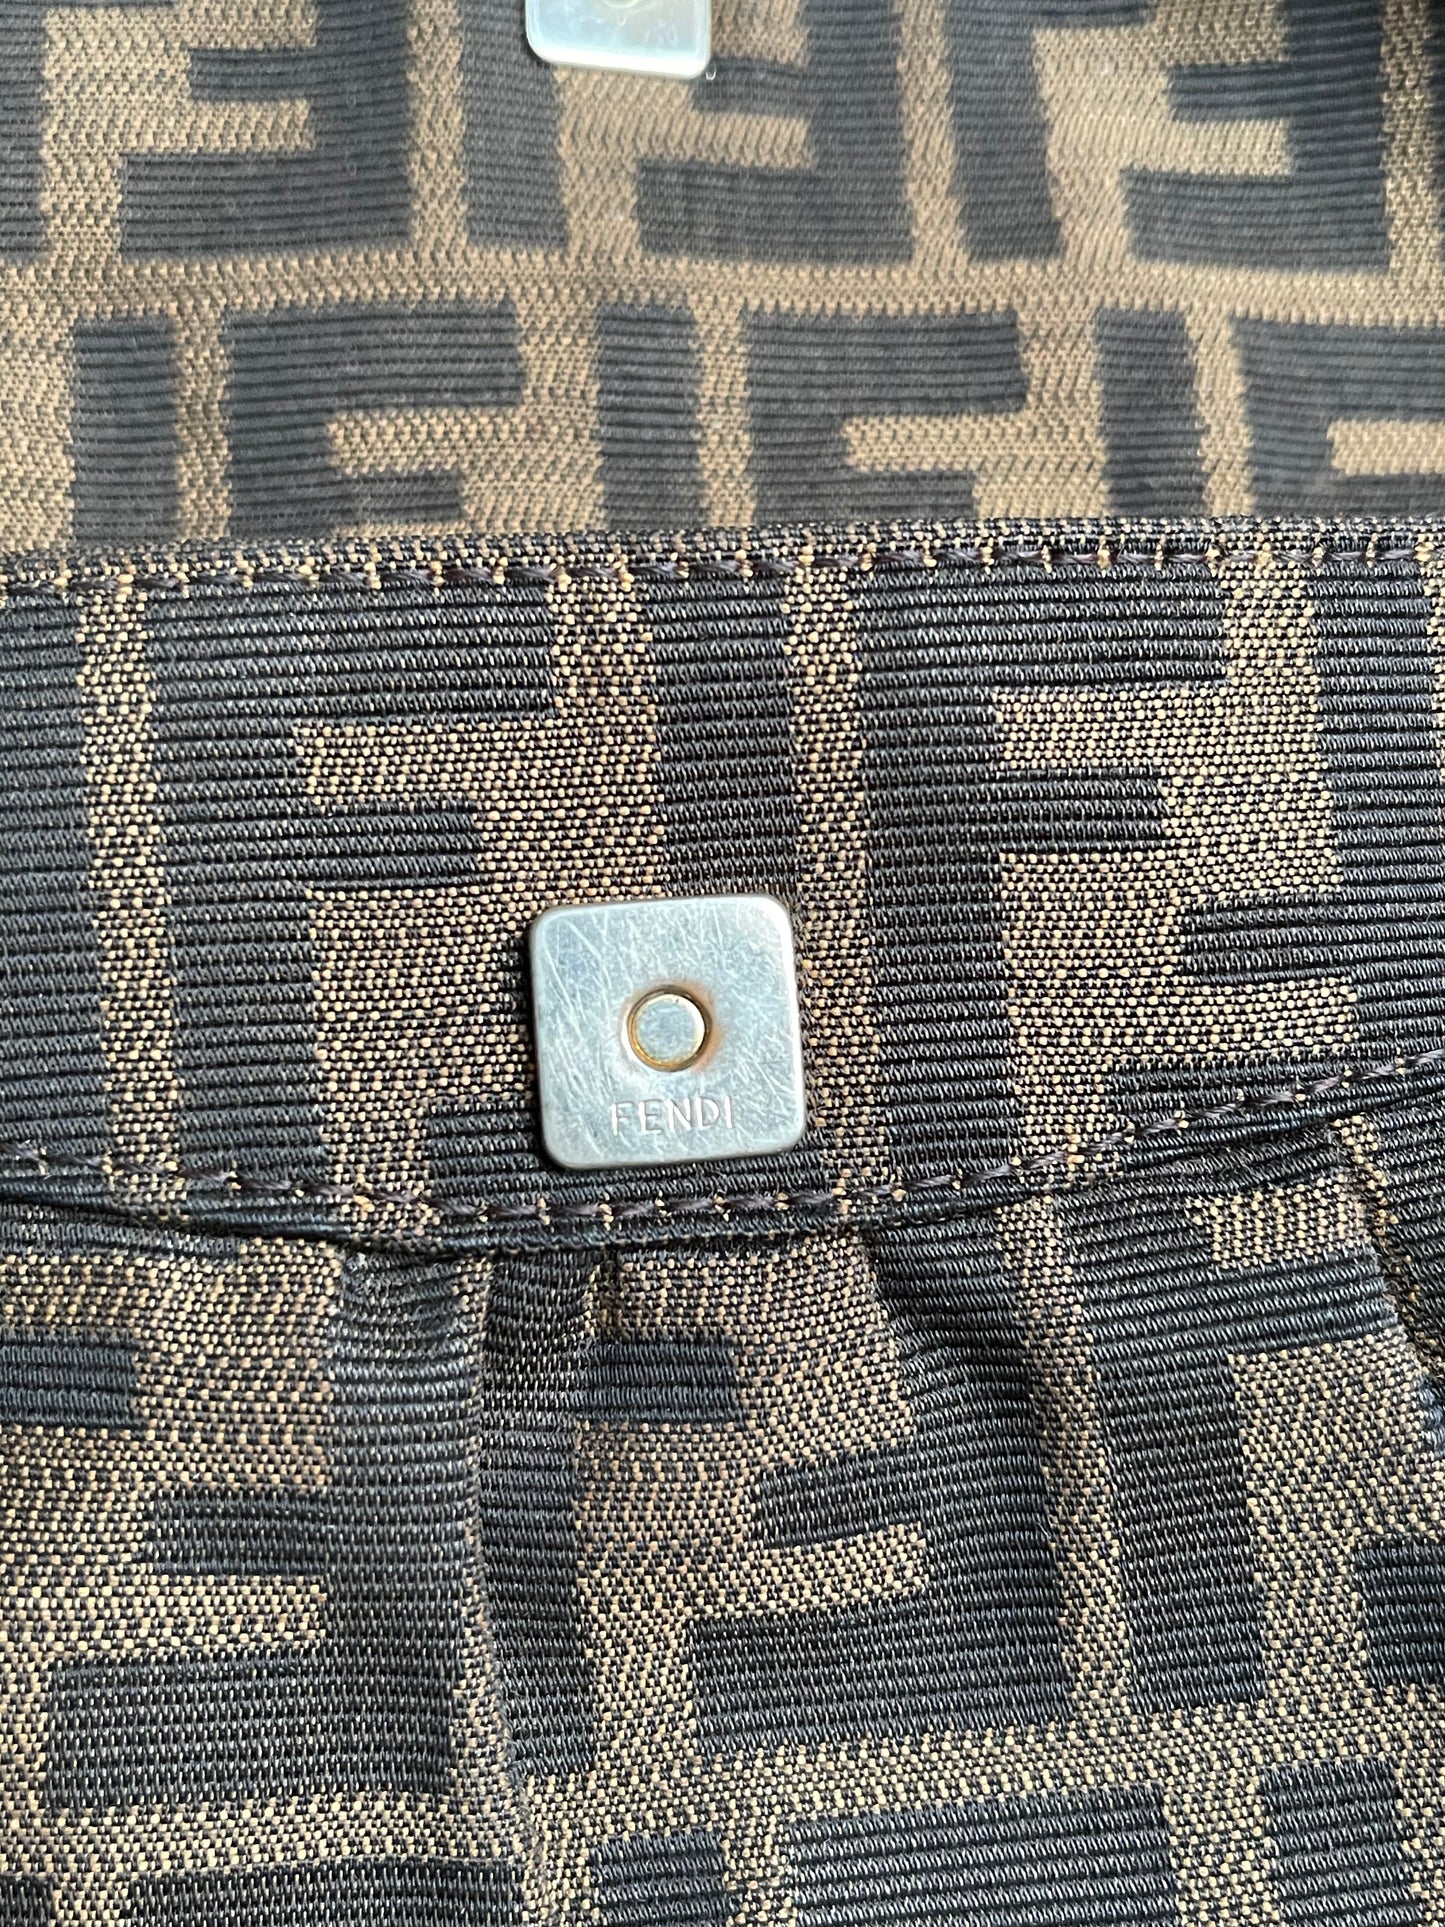 FENDI  mini cloth bag